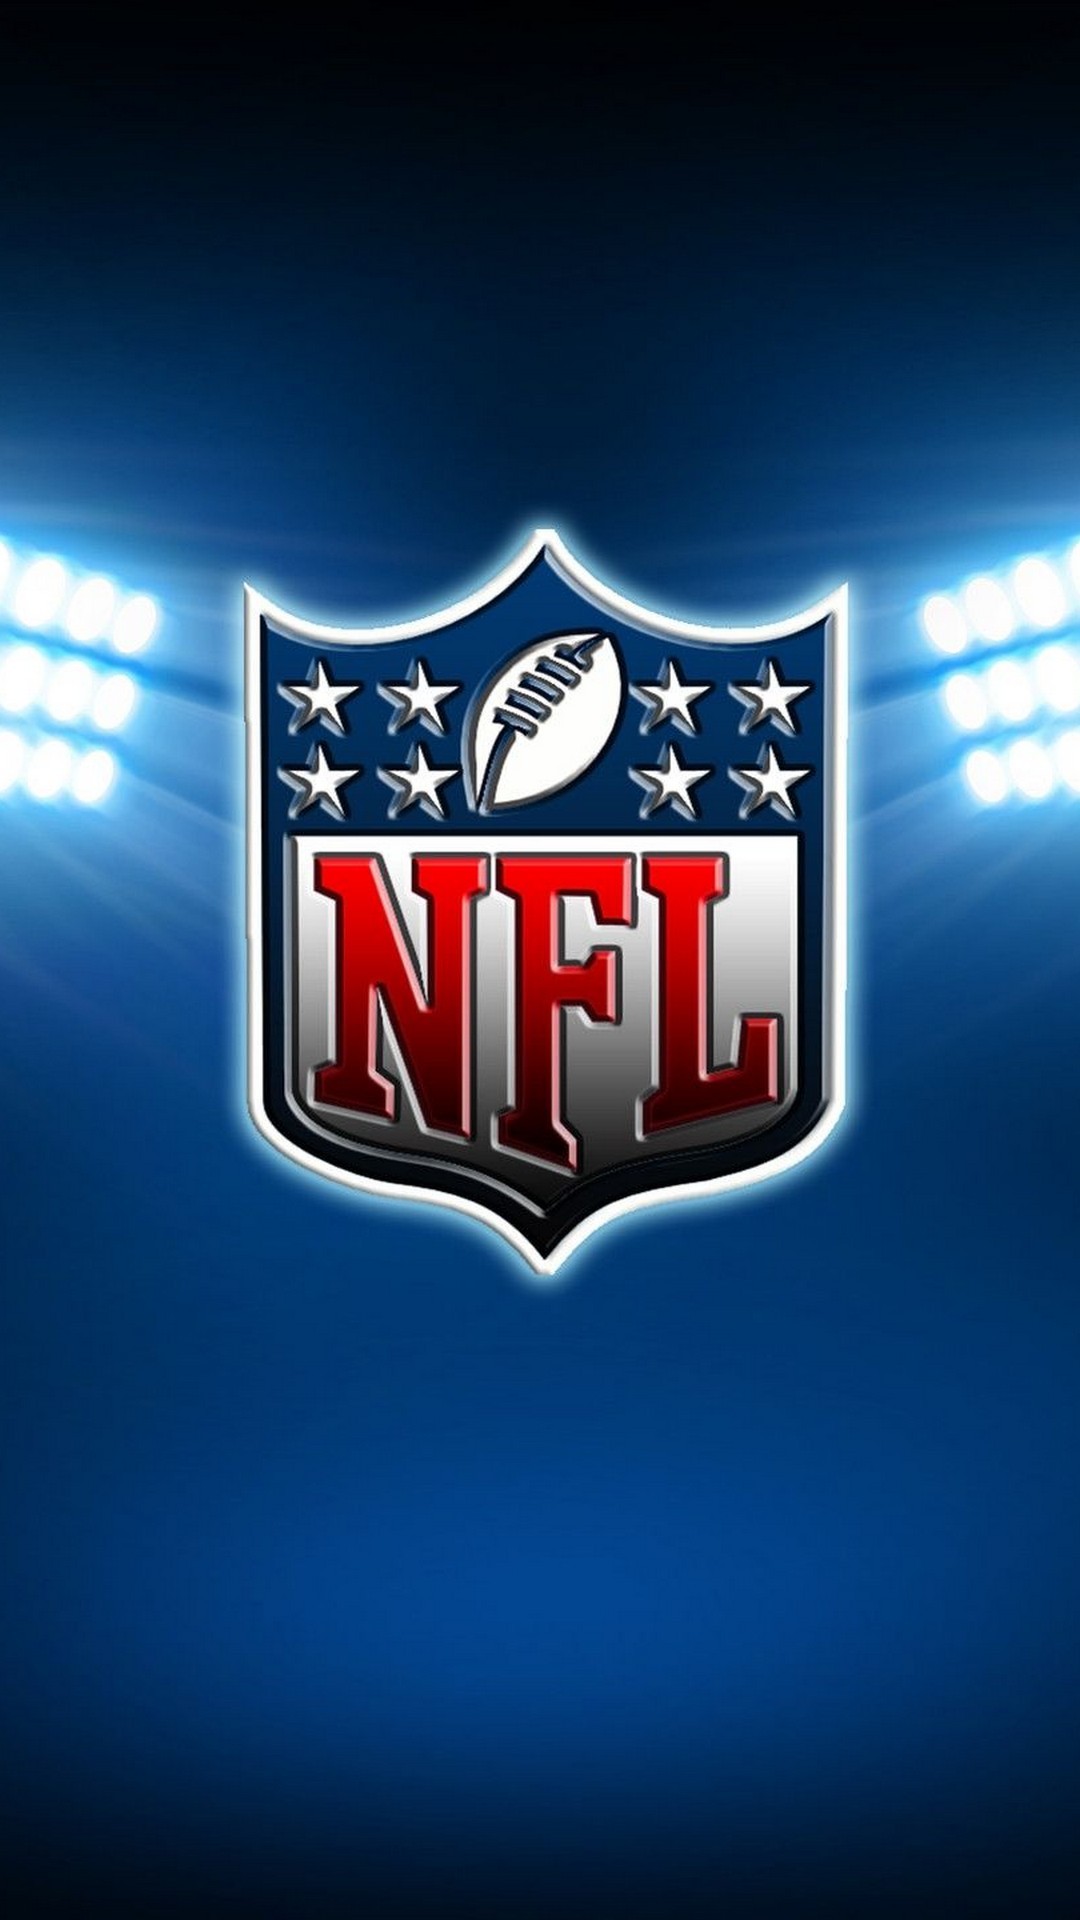 1080x1920 NFL iPhone 6 Wallpaper 